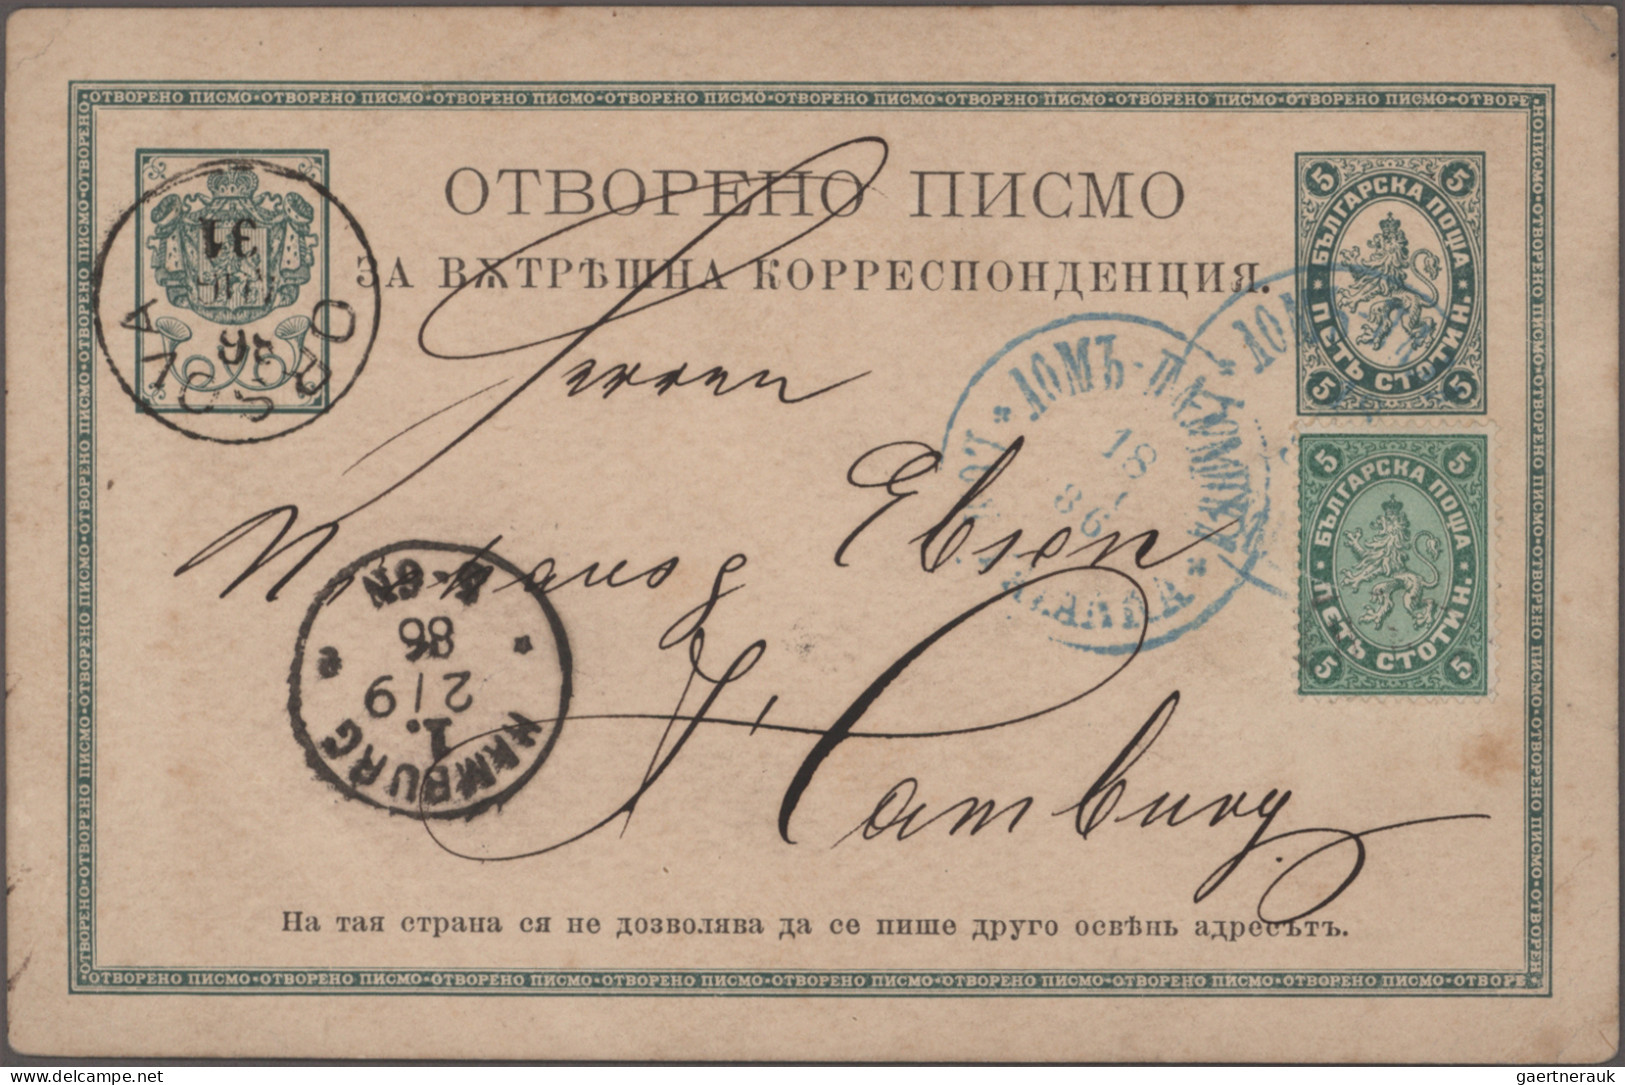 Bulgaria - postal stationery: 1879/1889, first nine postcard stationaries of Bul